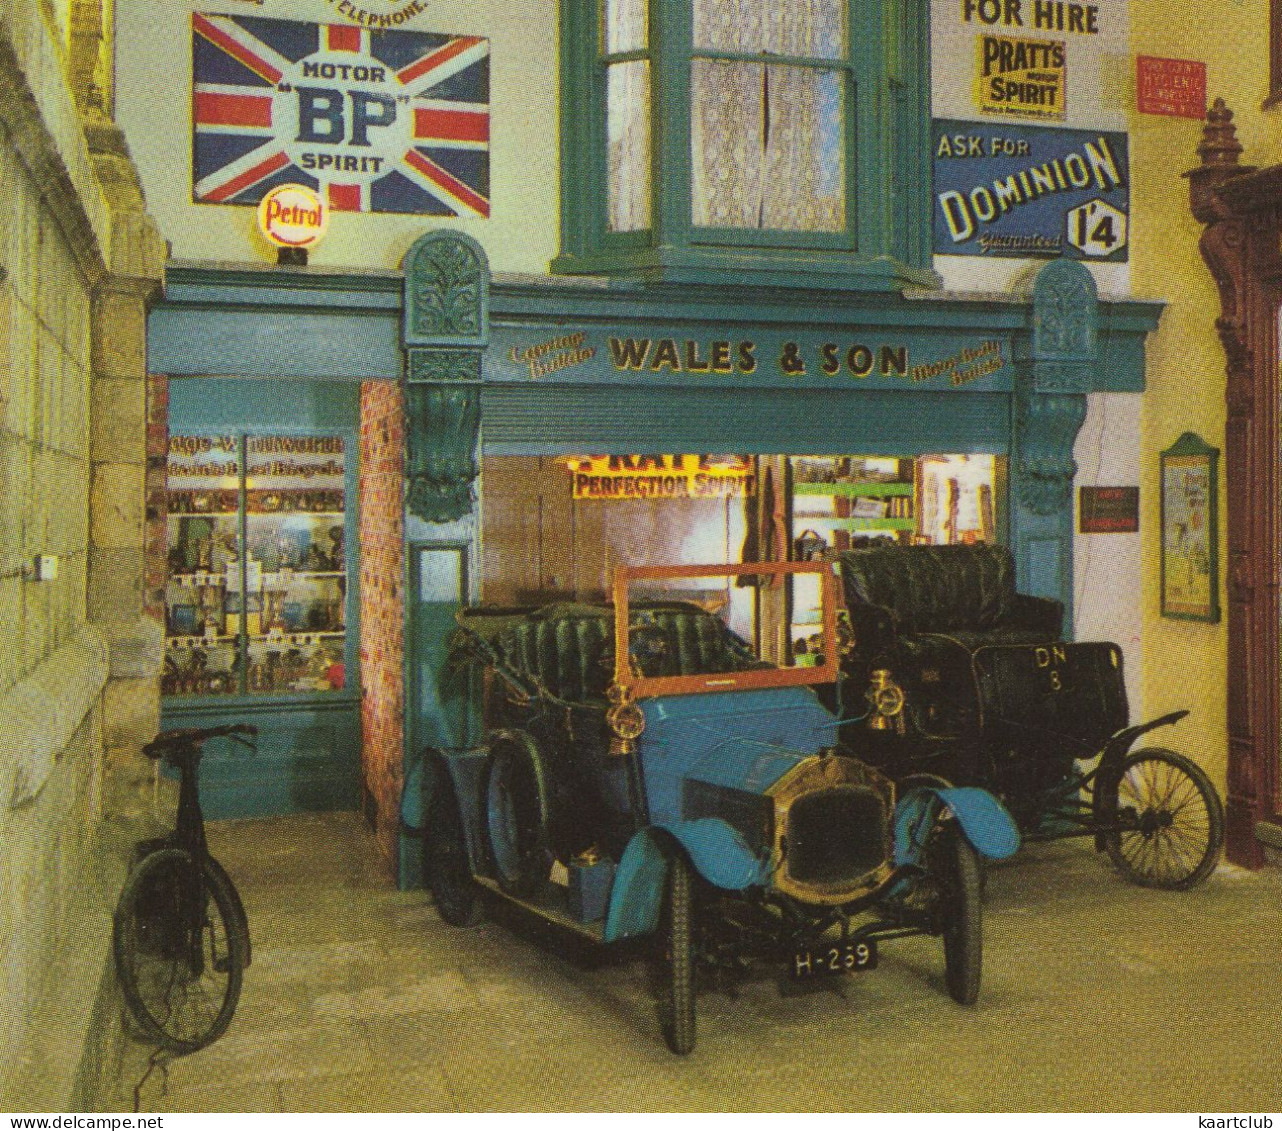 York: 1909 COLIBRI MOTOR CAR, 1899 GROUT STEAM CAR, 2 OLD BICYCLES - 'Motor B.P. Spirit' - Castle Museum Garage - (U.K.) - Turismo